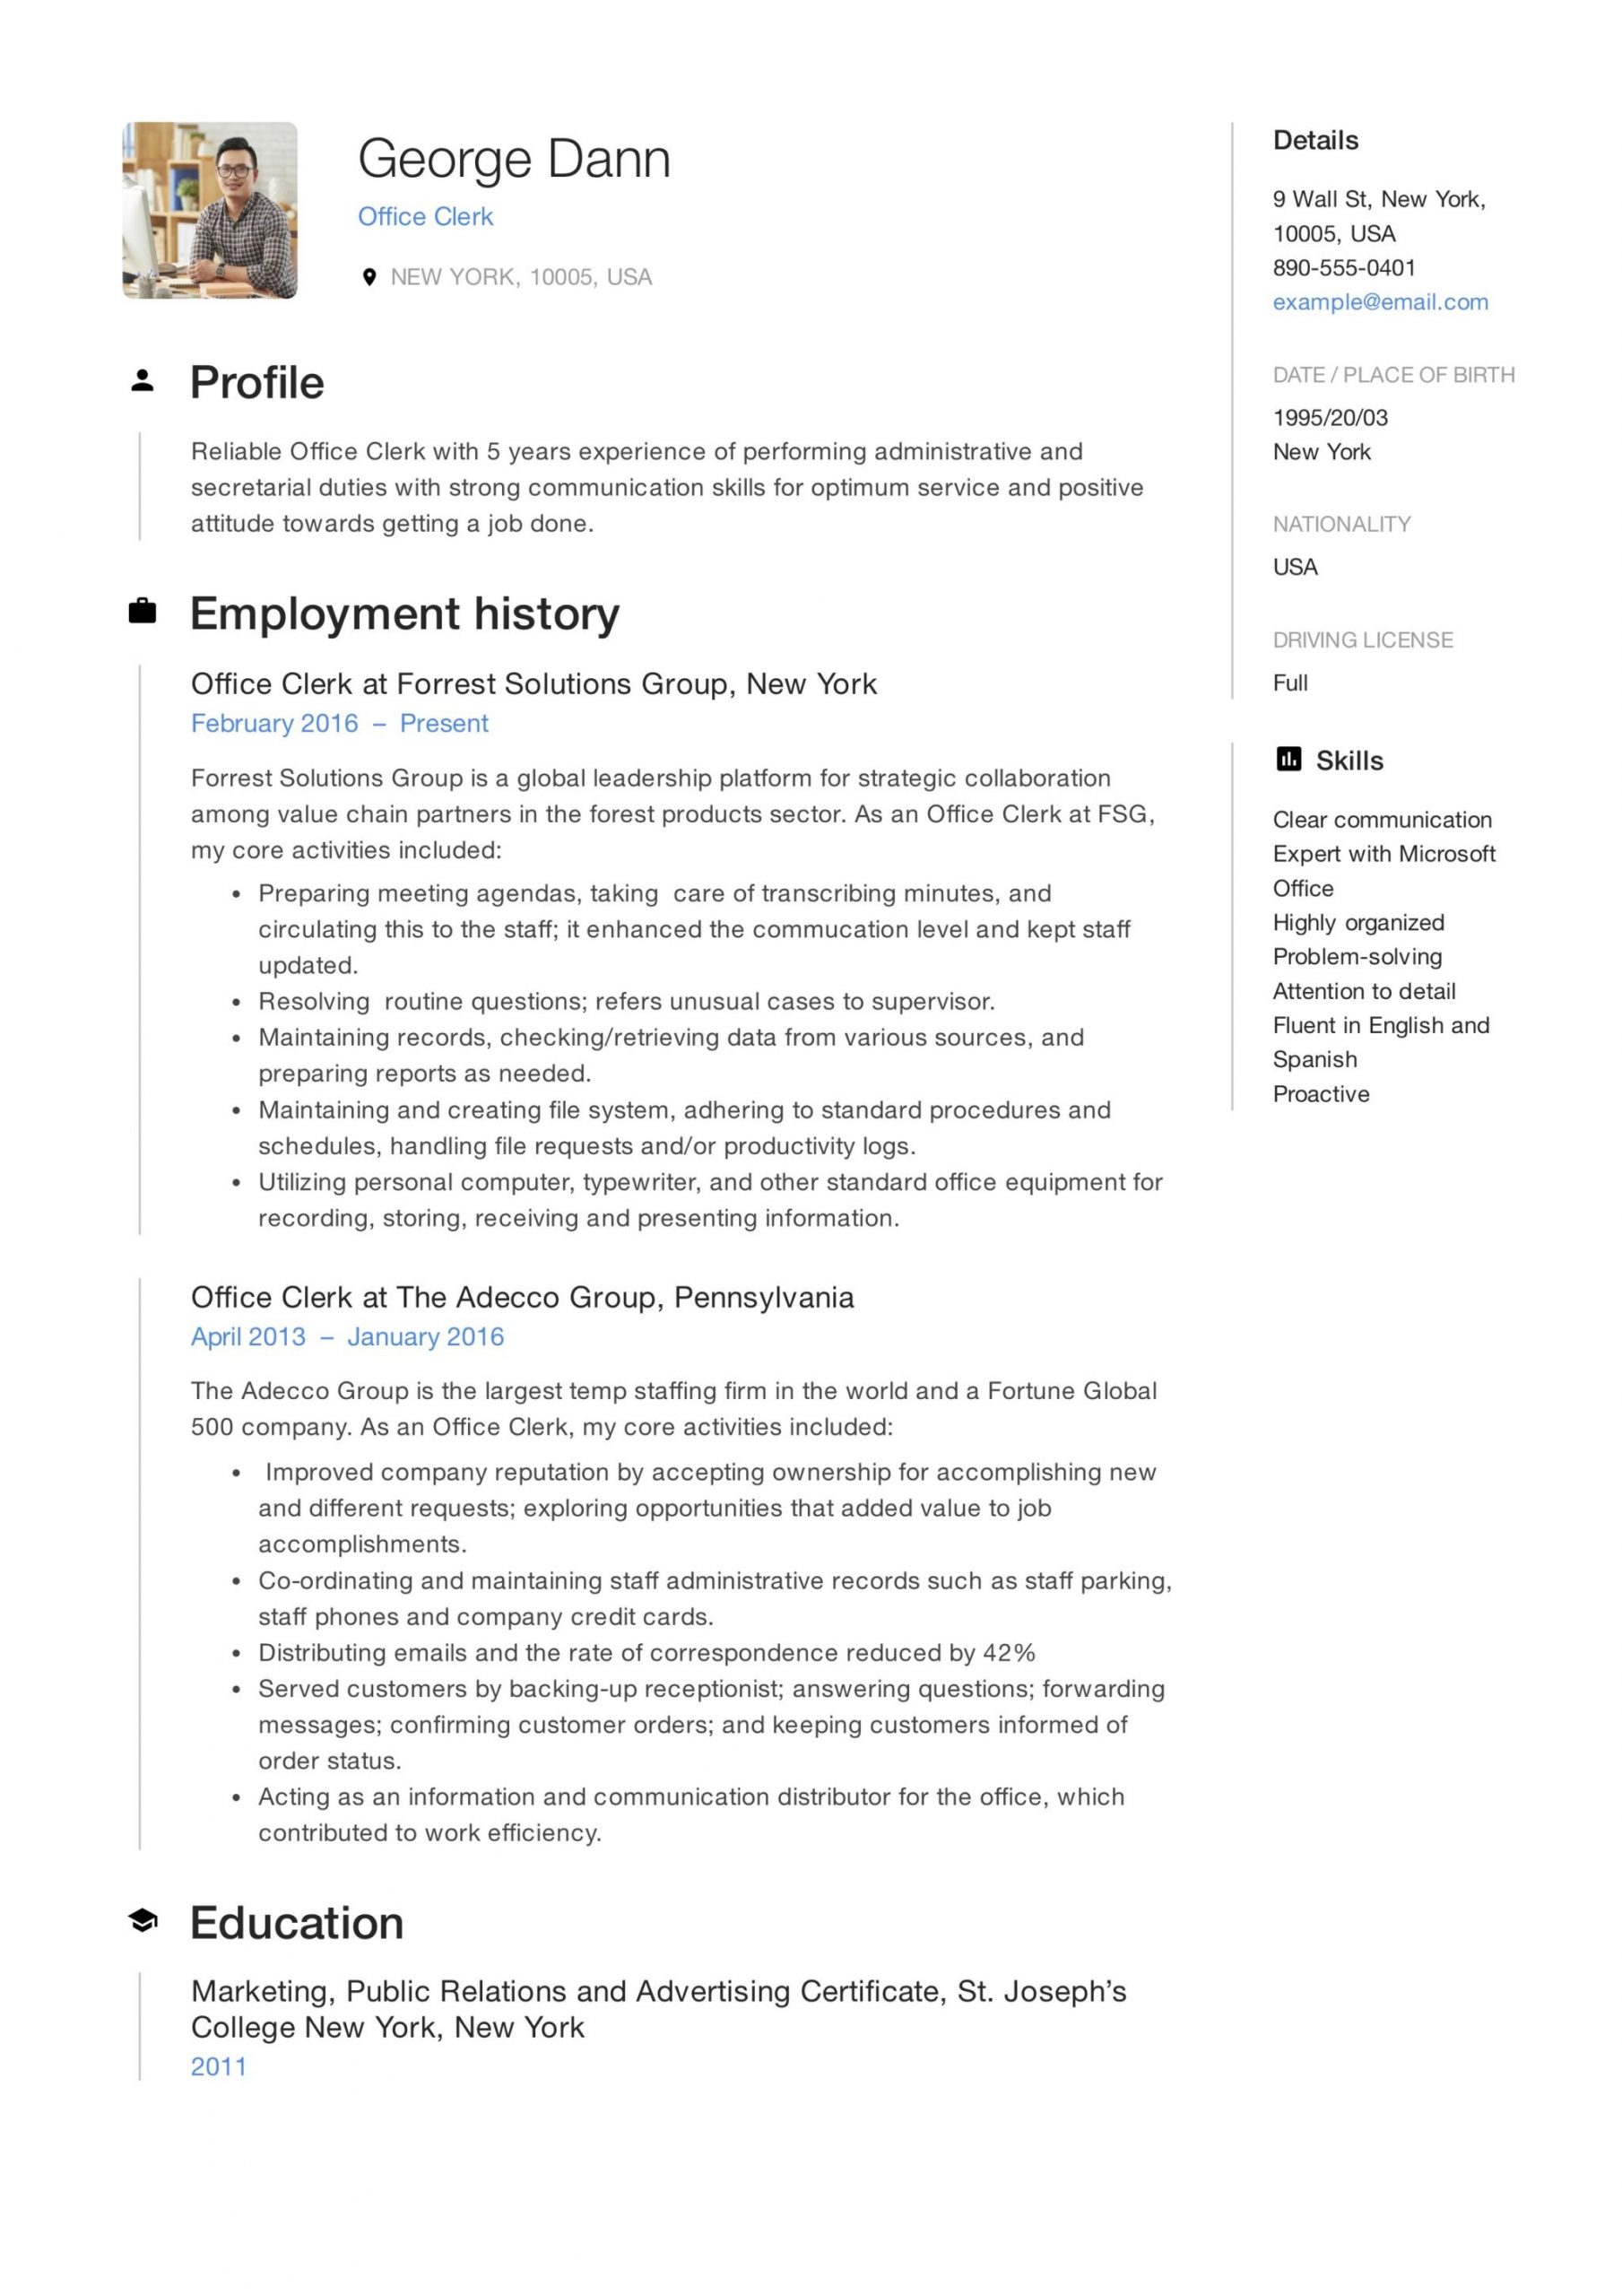 Resume Objective Sample for Office Staff Office Clerk Resume & Guide  12 Samples Pdf 2020